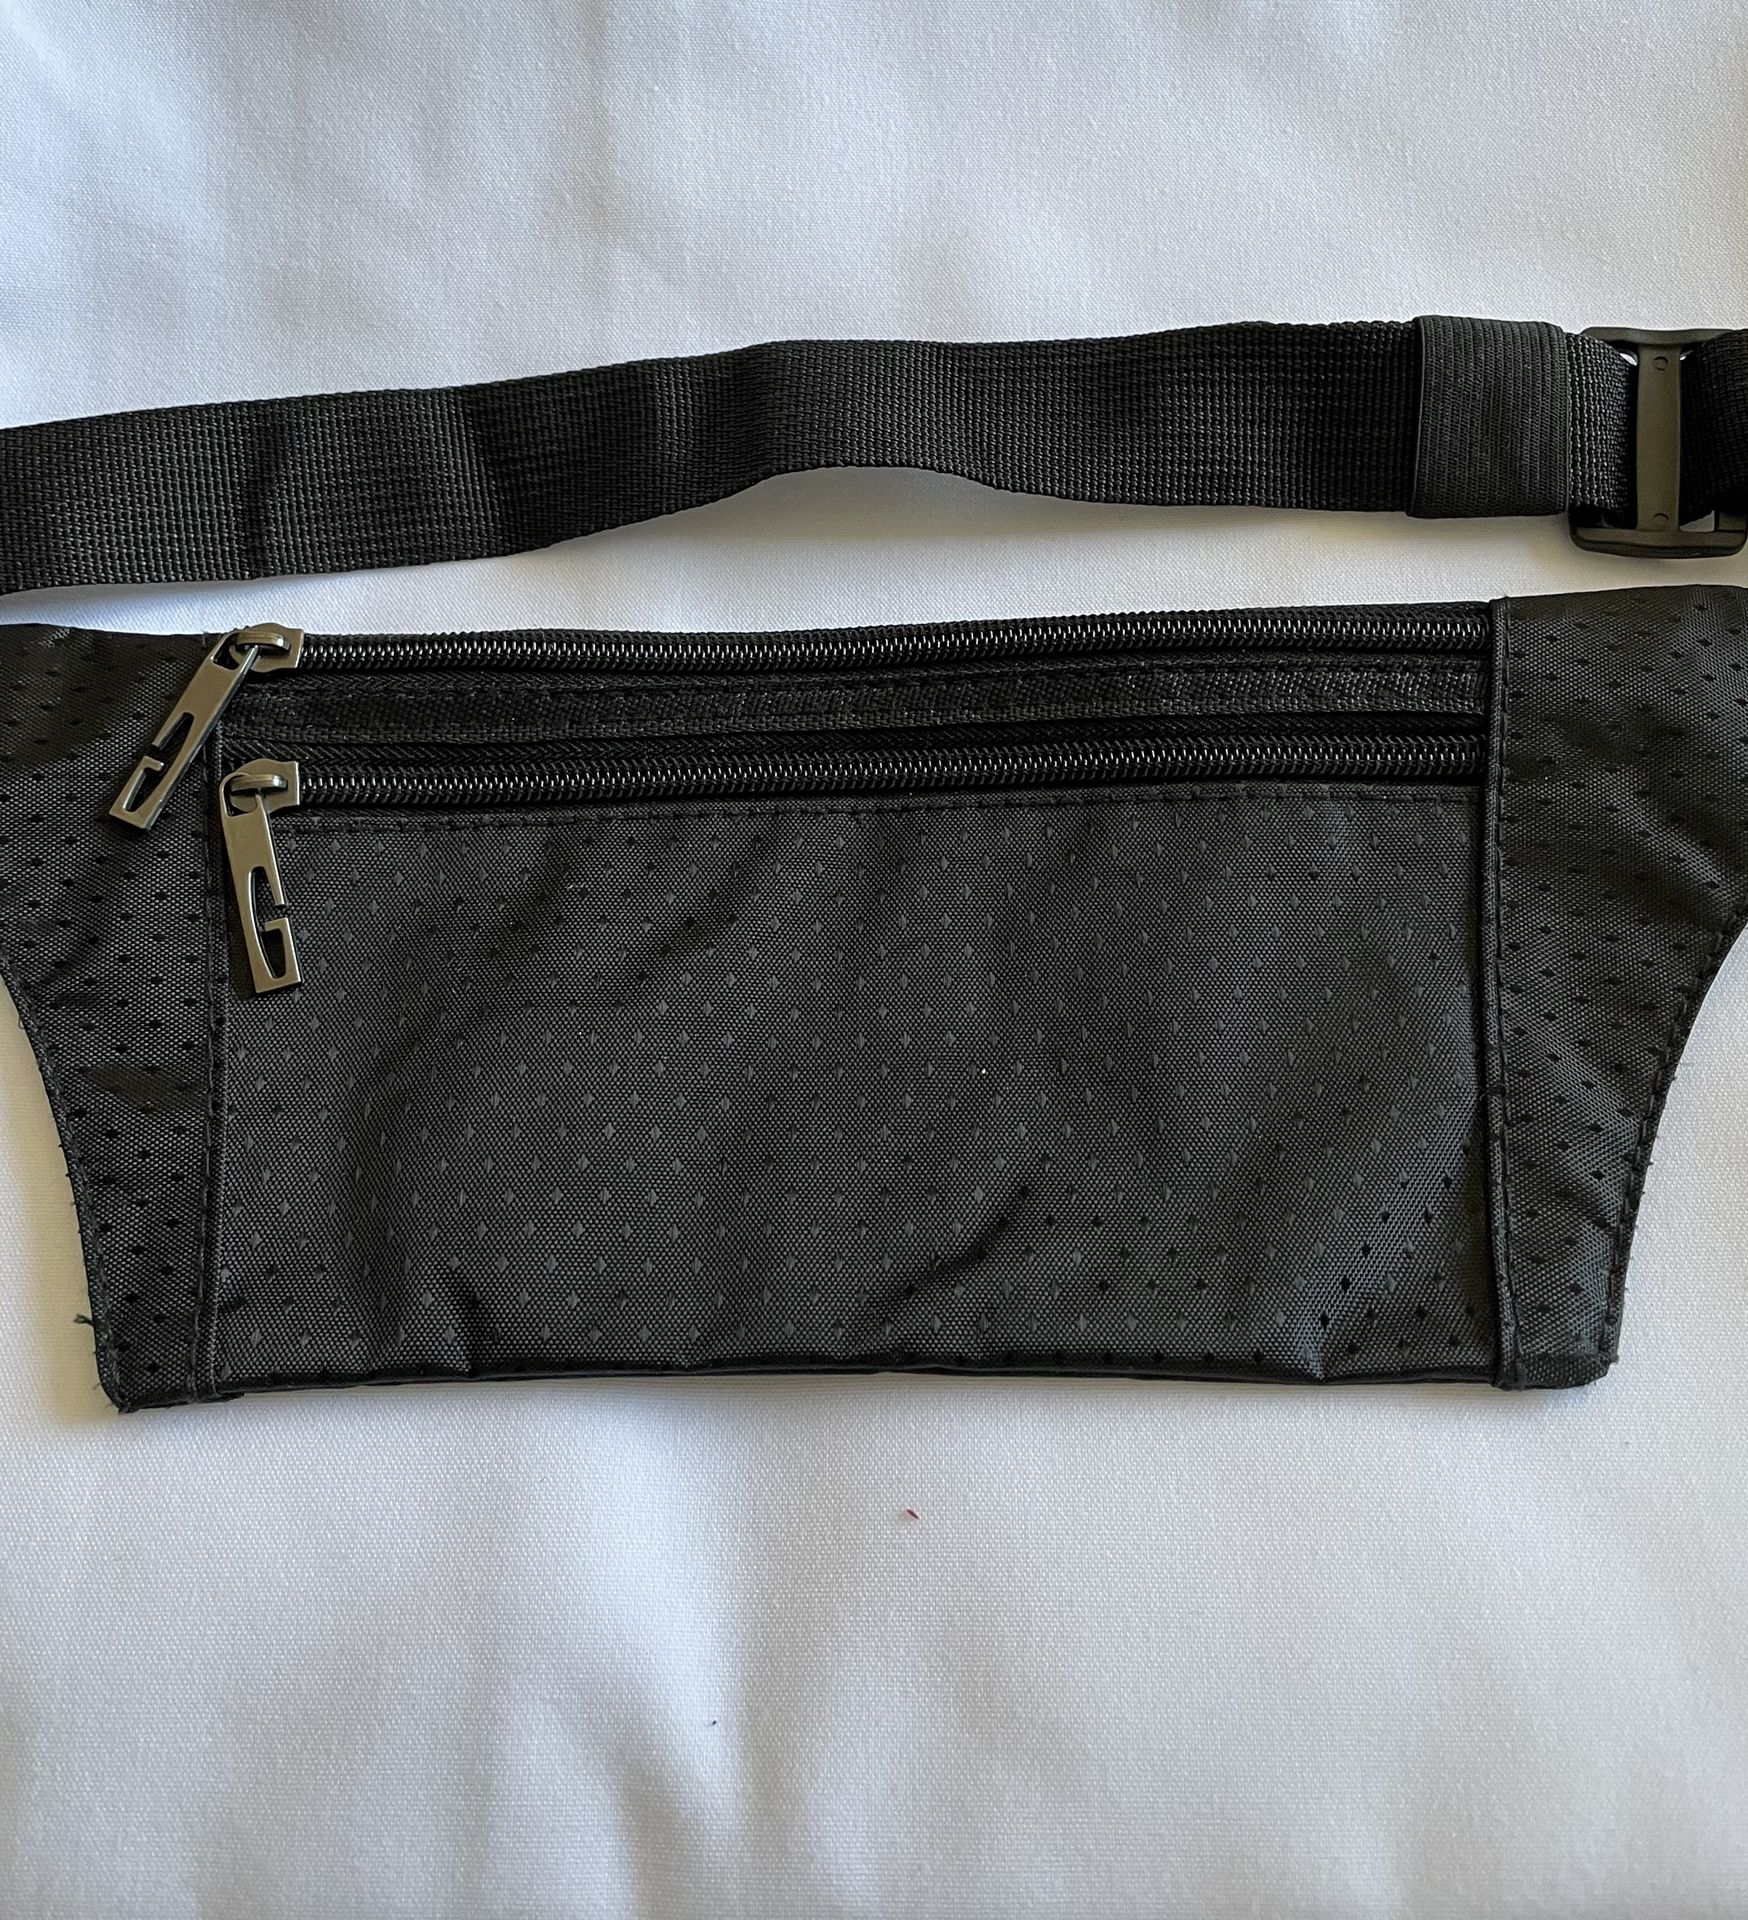 Slim Black waist Bag/ Fanny pack